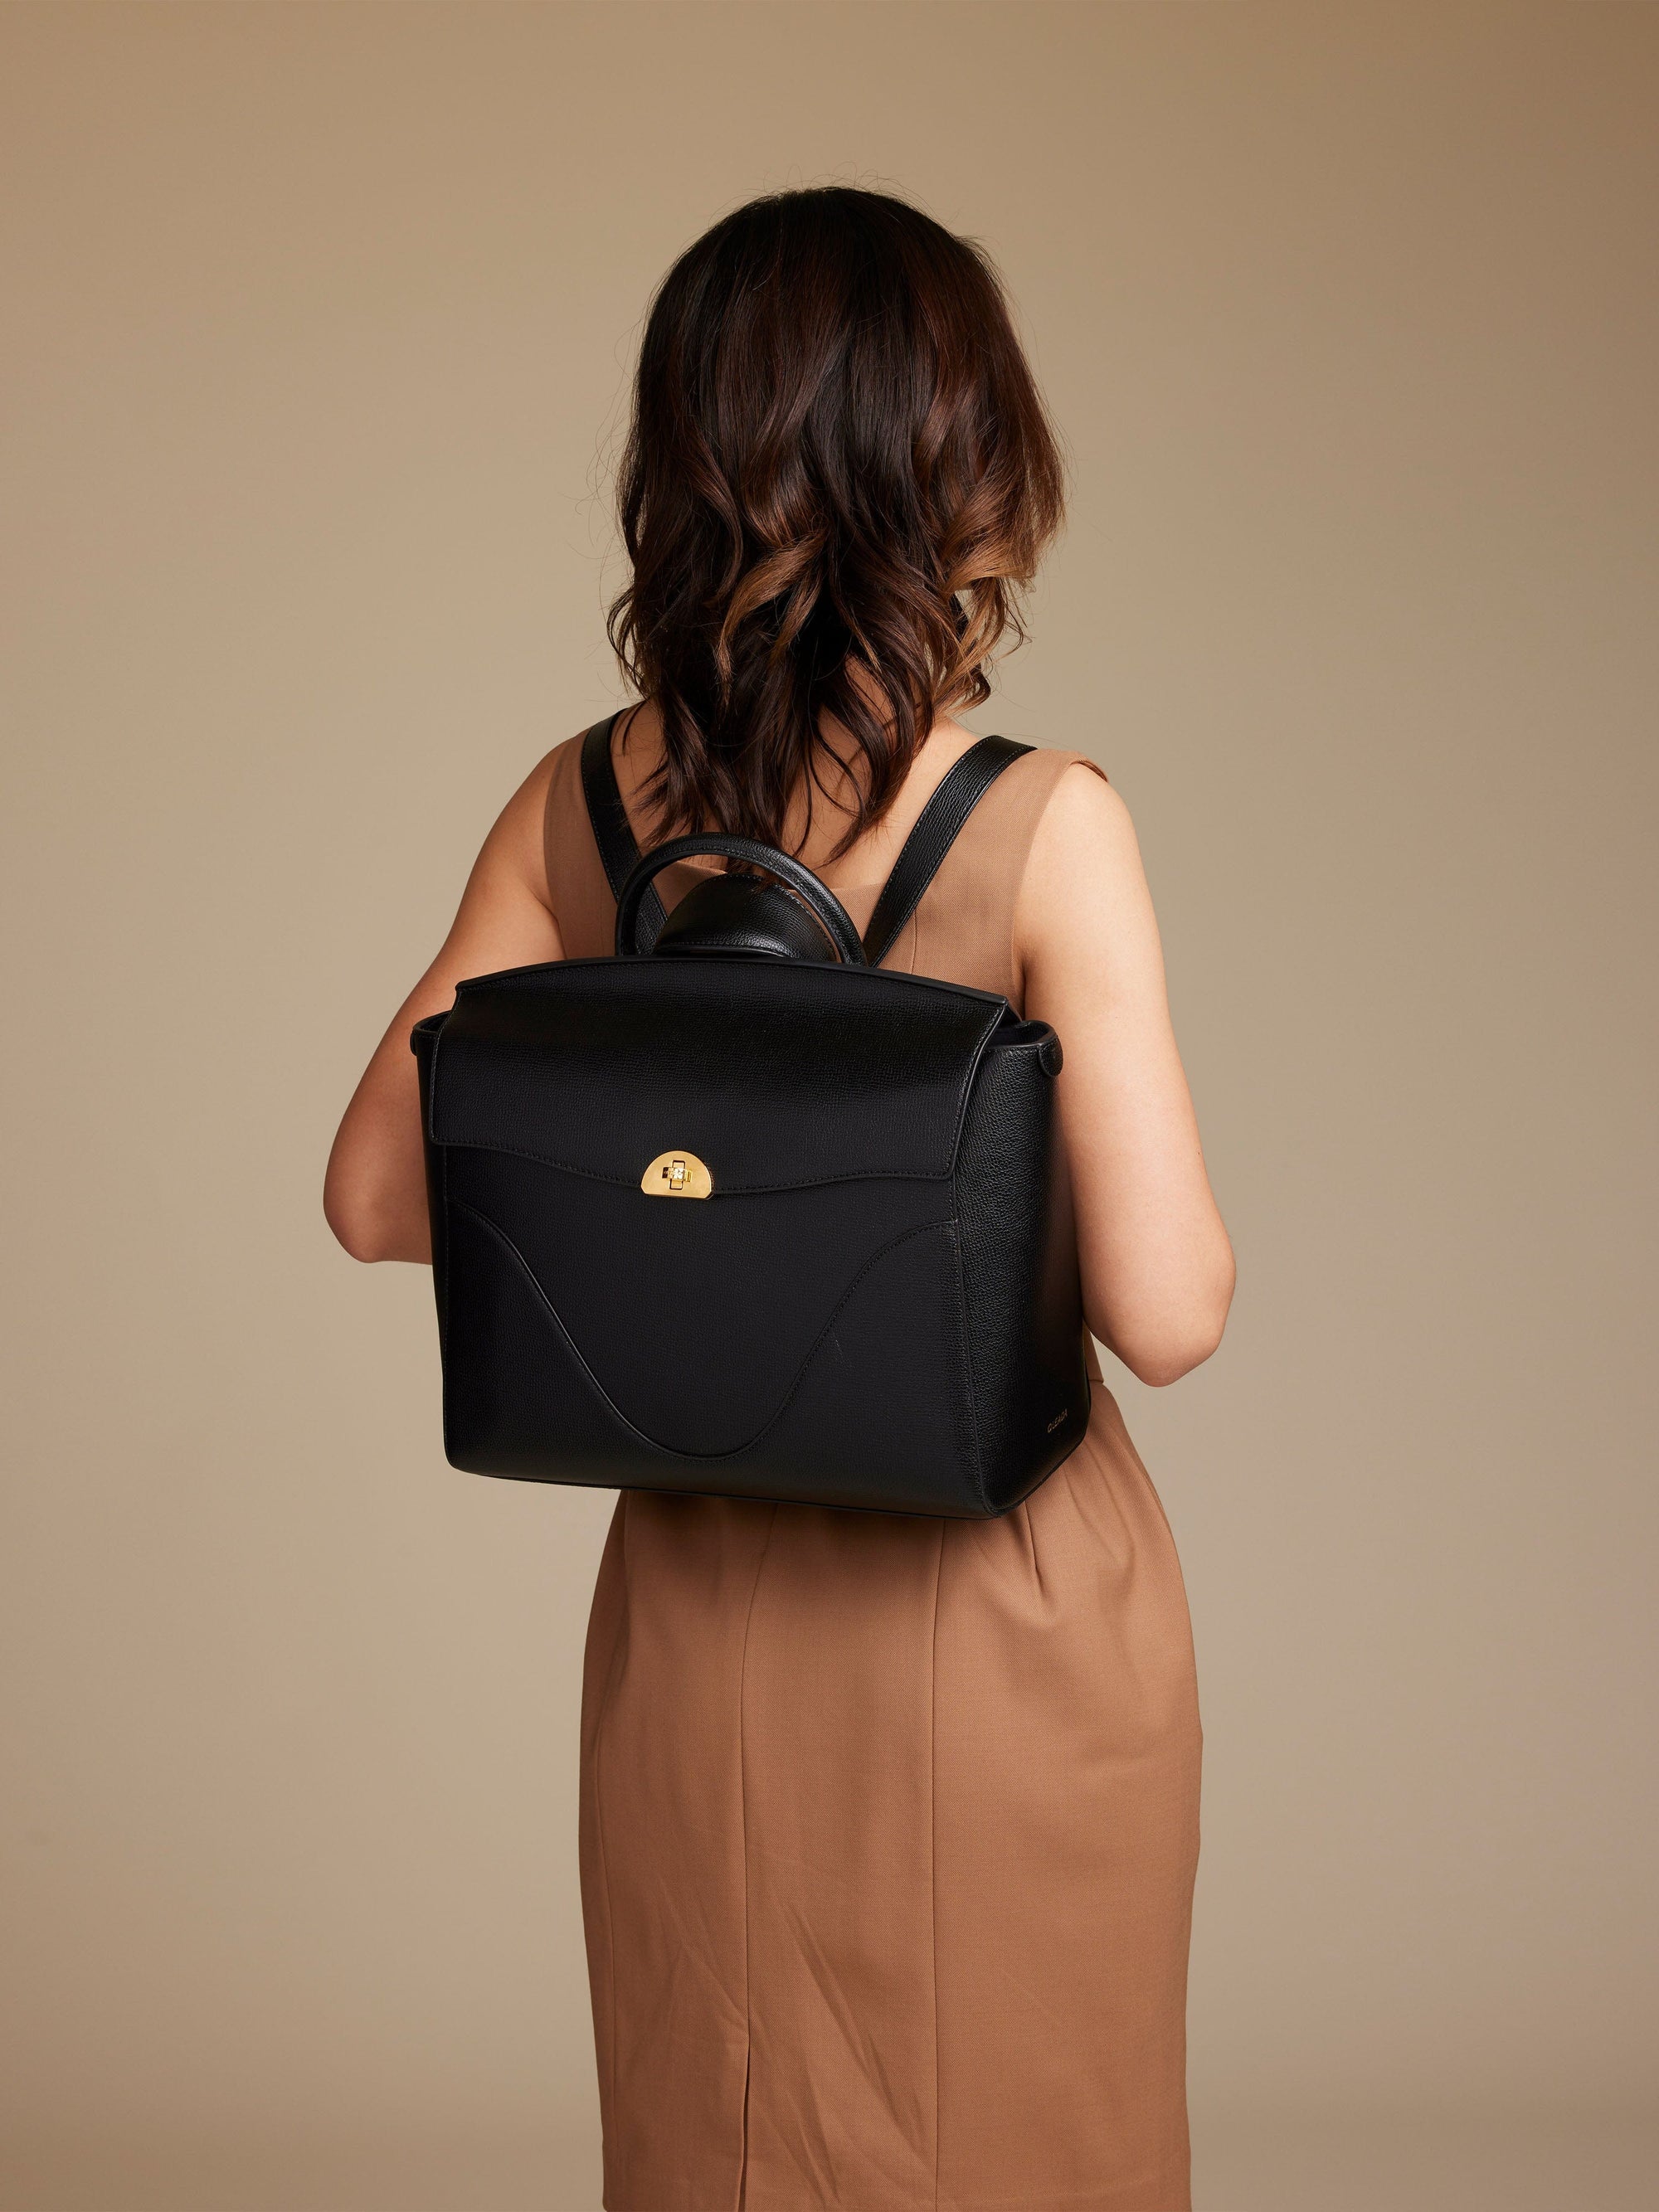 OLEADA Apparel and Accessories > Women > Work Bag > Leather Handbag > Travel Backpack for Business Wavia Bag Plus Onyx